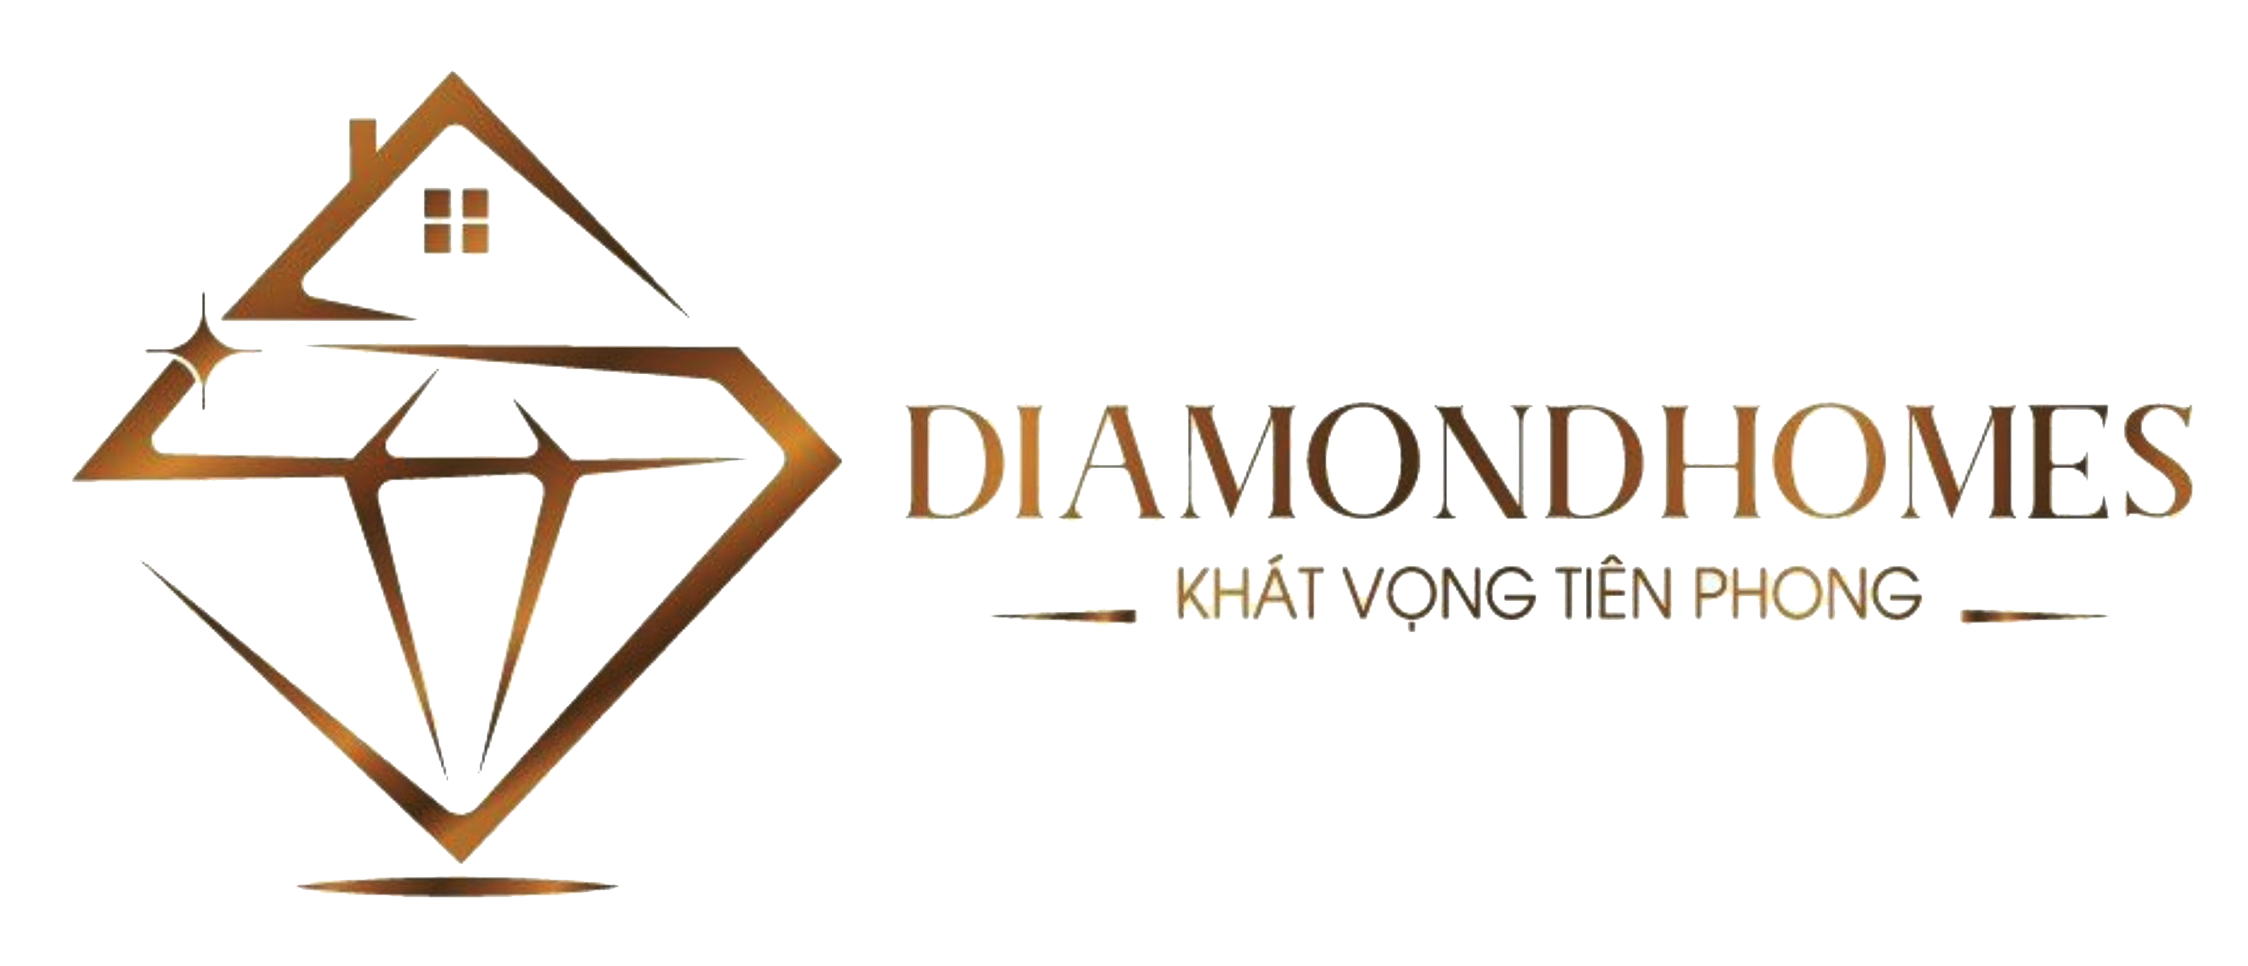 DiamondHomes